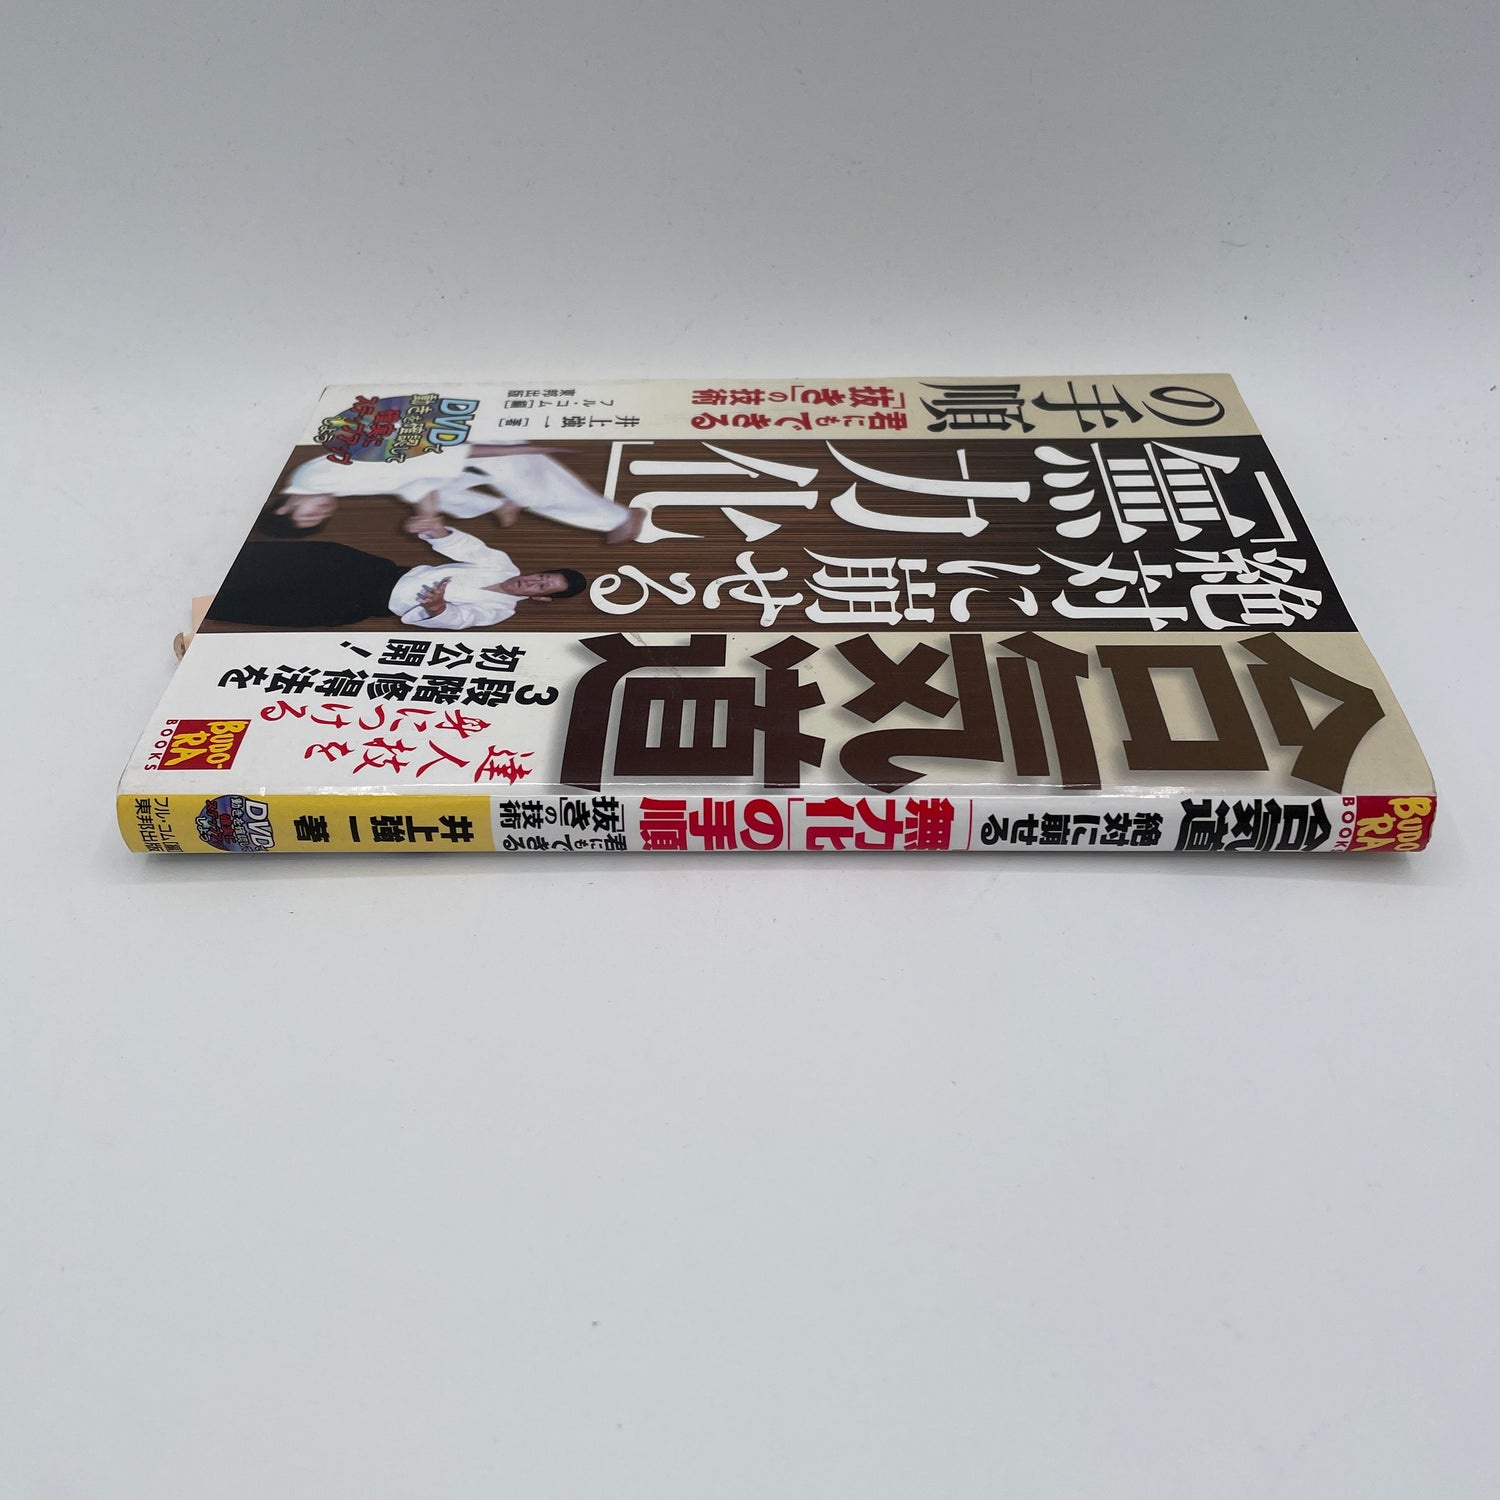 Libro y DVD de Aikido Muryoka de Kyoichi Inoue